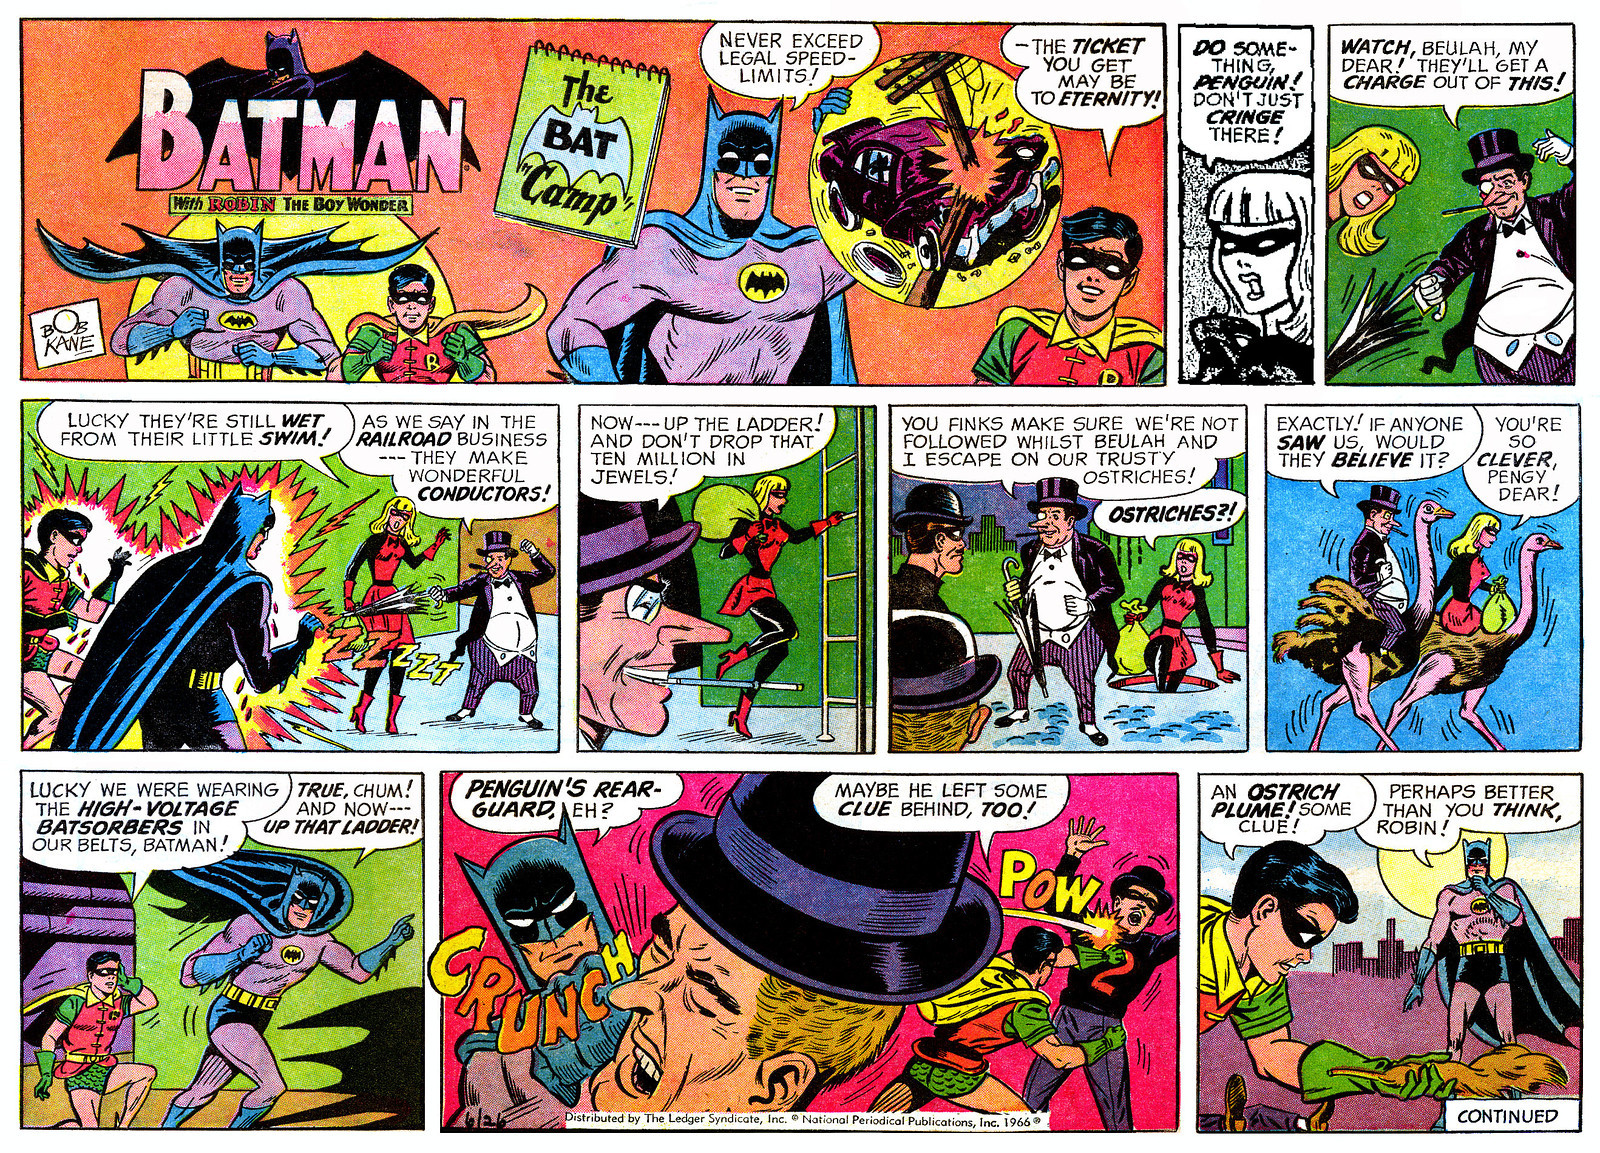 7-best-images-of-printable-batman-comics-printable-batman-comic-book